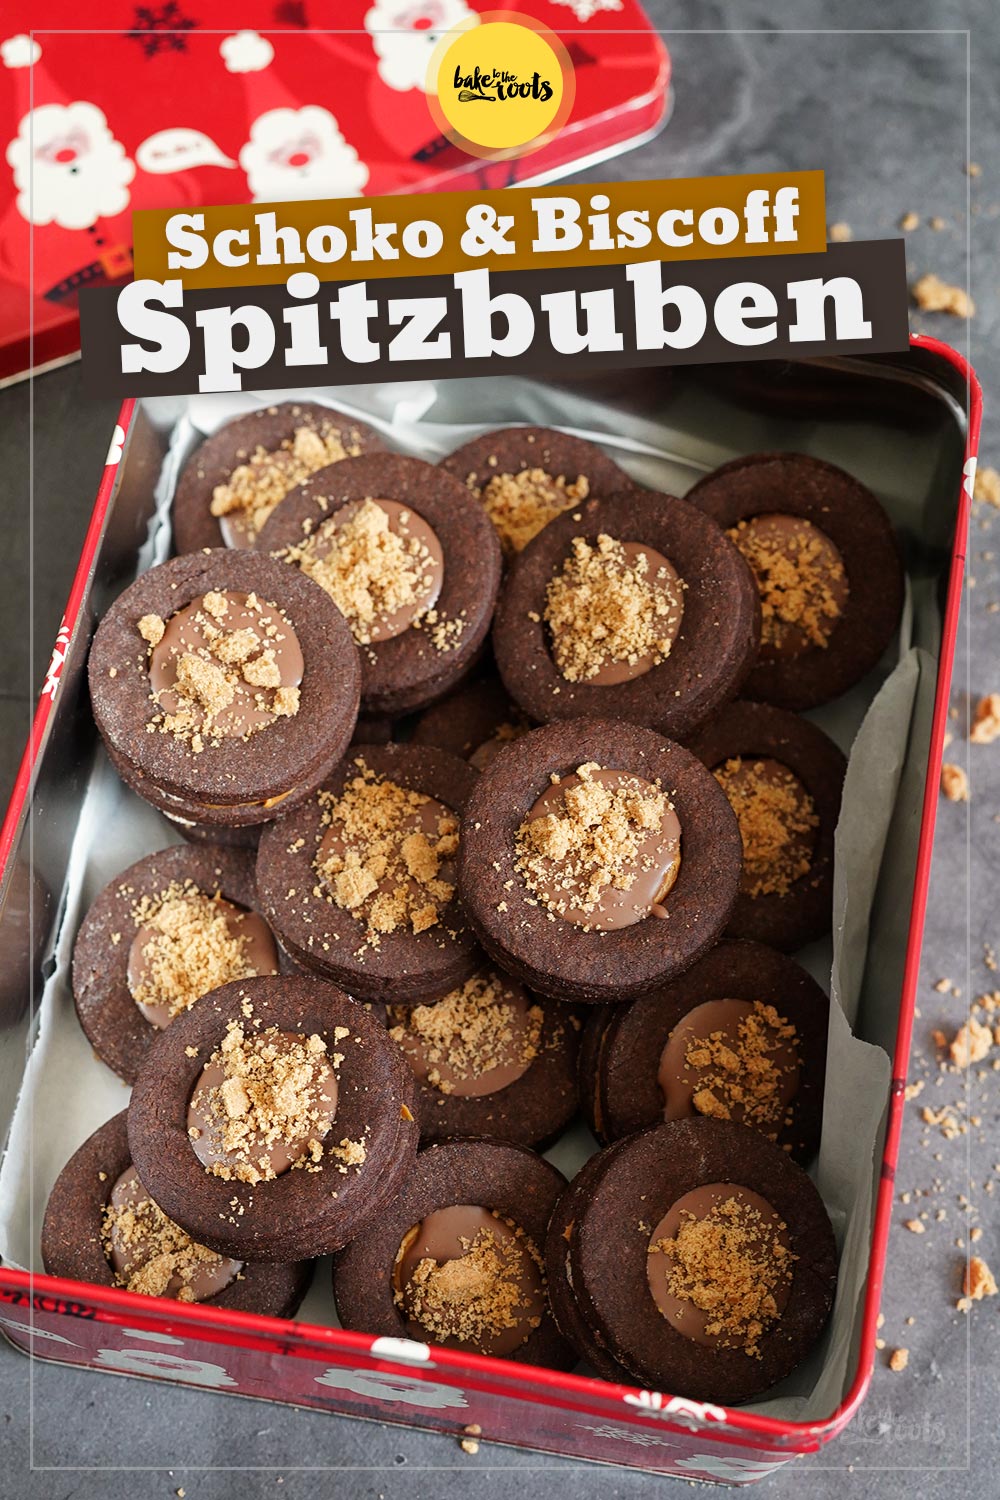 Schoko-Spitzbuben mit Biscoff & Spekulatius | Bake to the roots